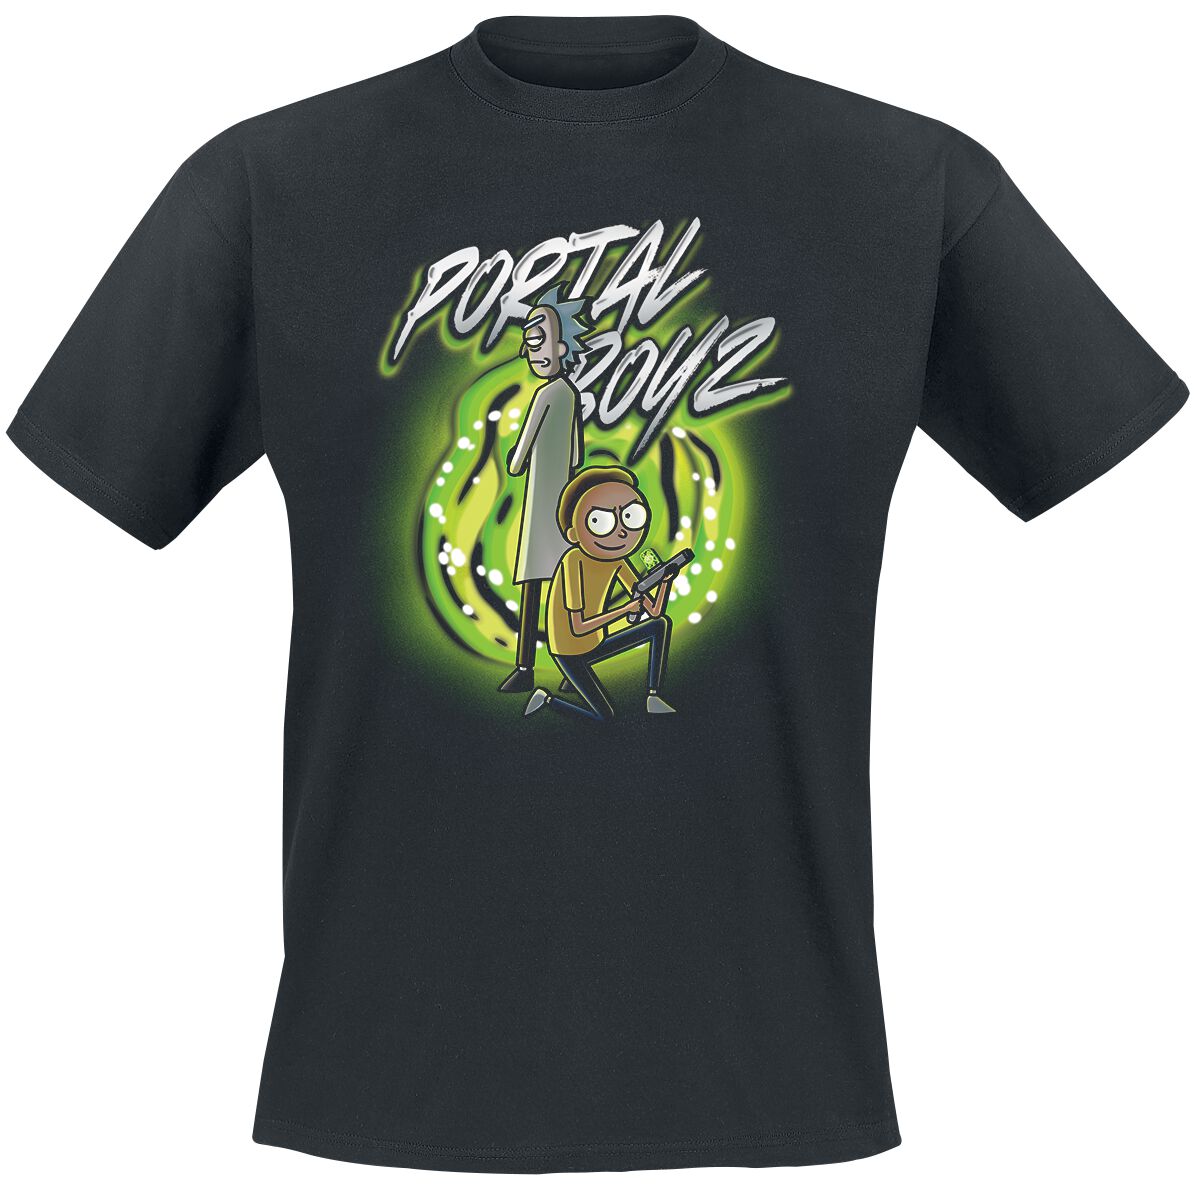 Rick And Morty Portal Boyz T-Shirt black